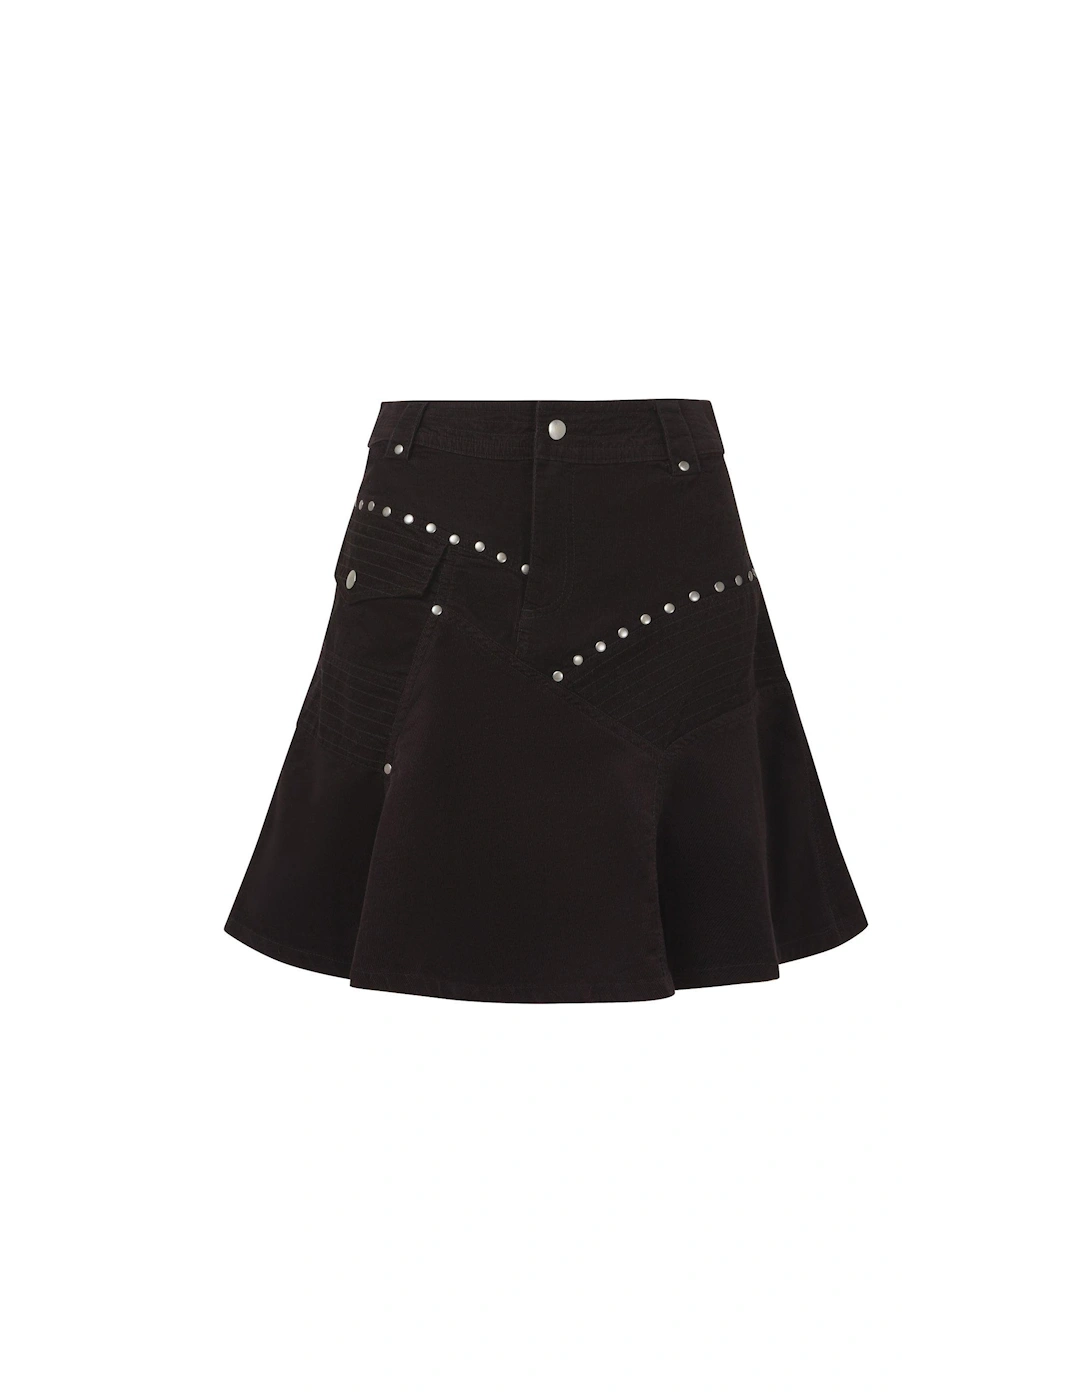 Rock It Up Studded Skirt - Black